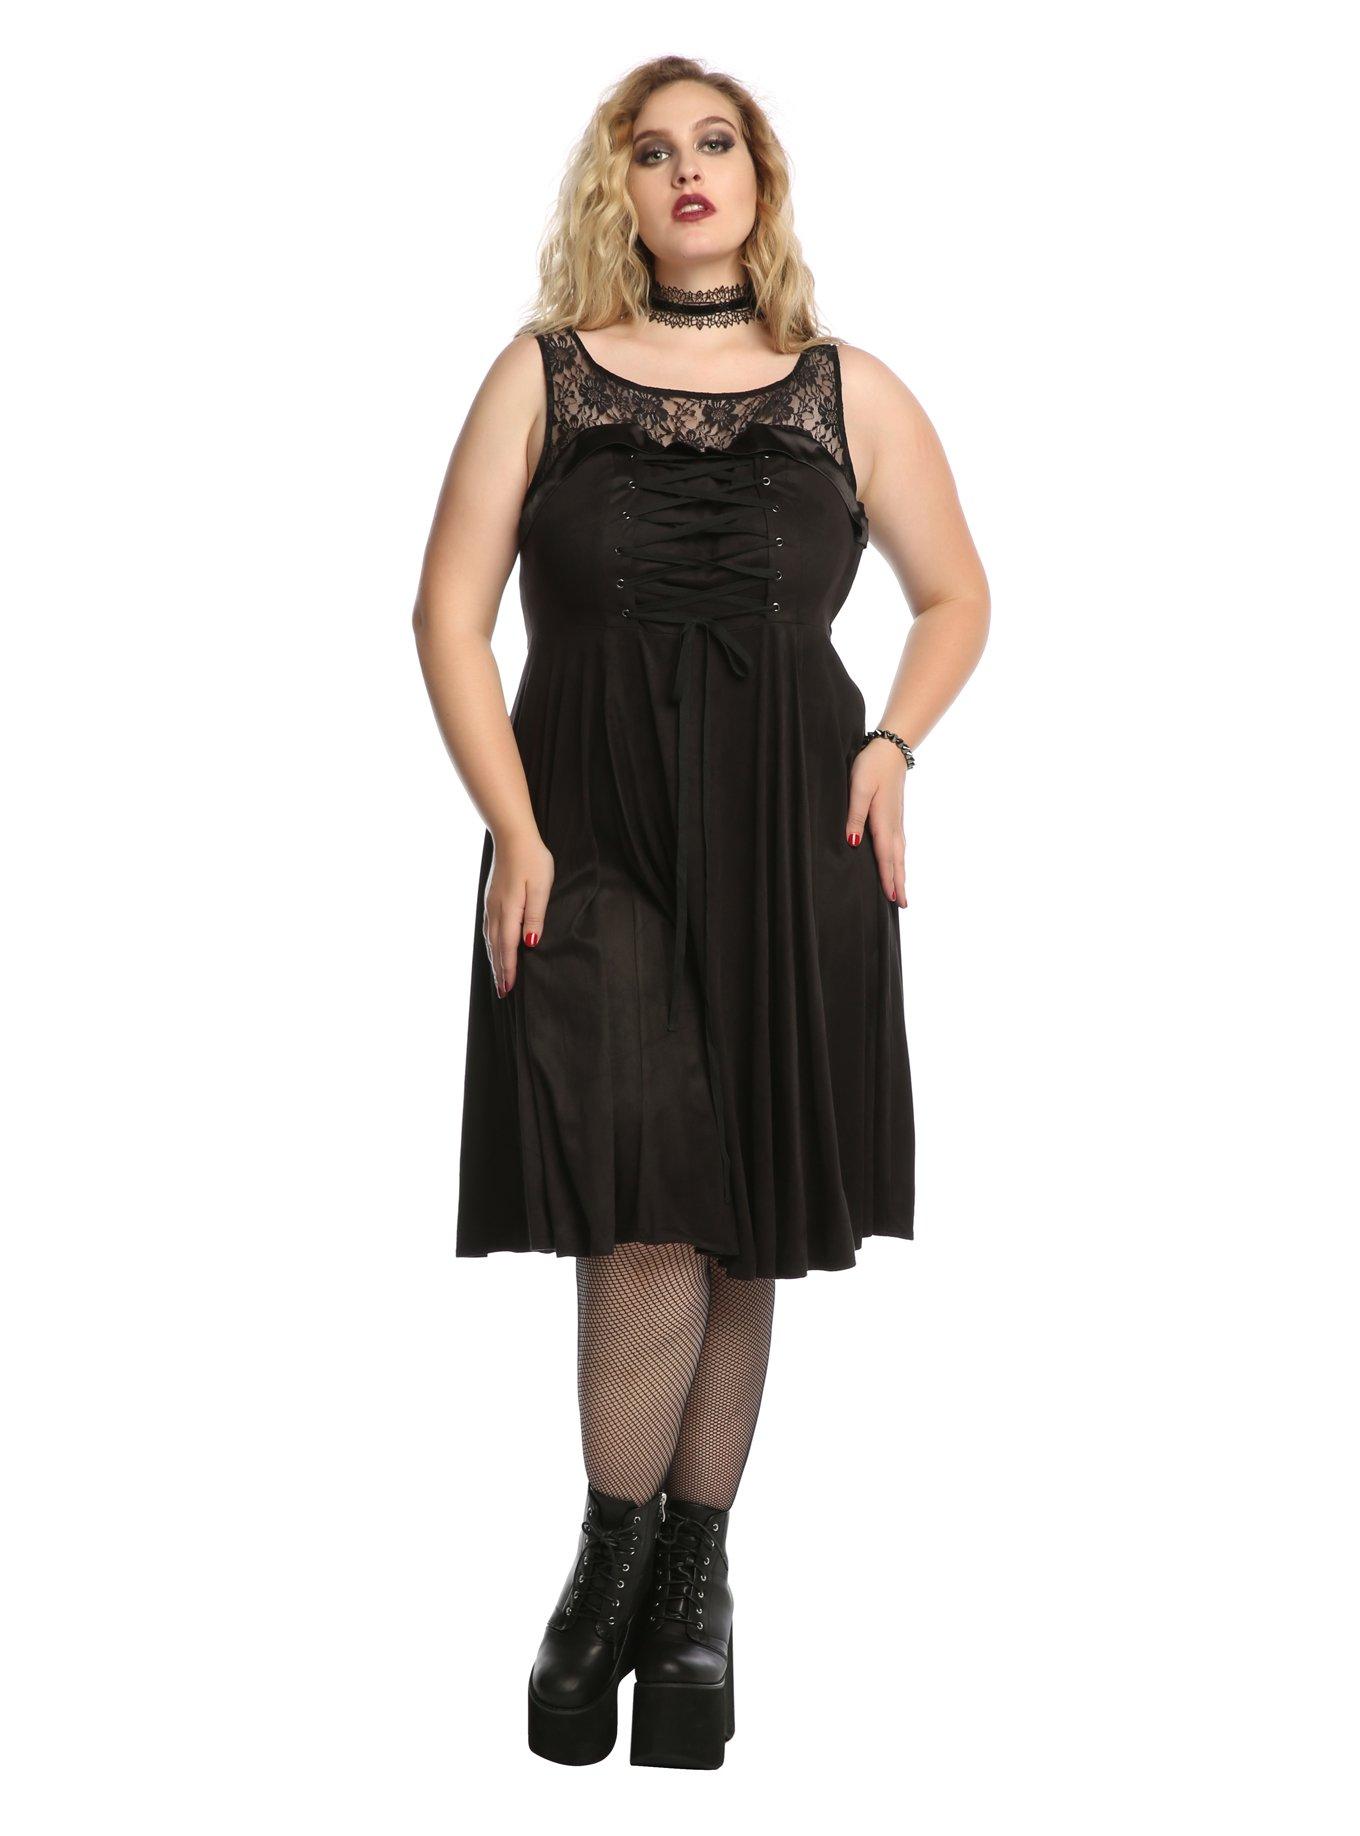 Black Lace-Up Sweetheart Sleeveless Dress Plus